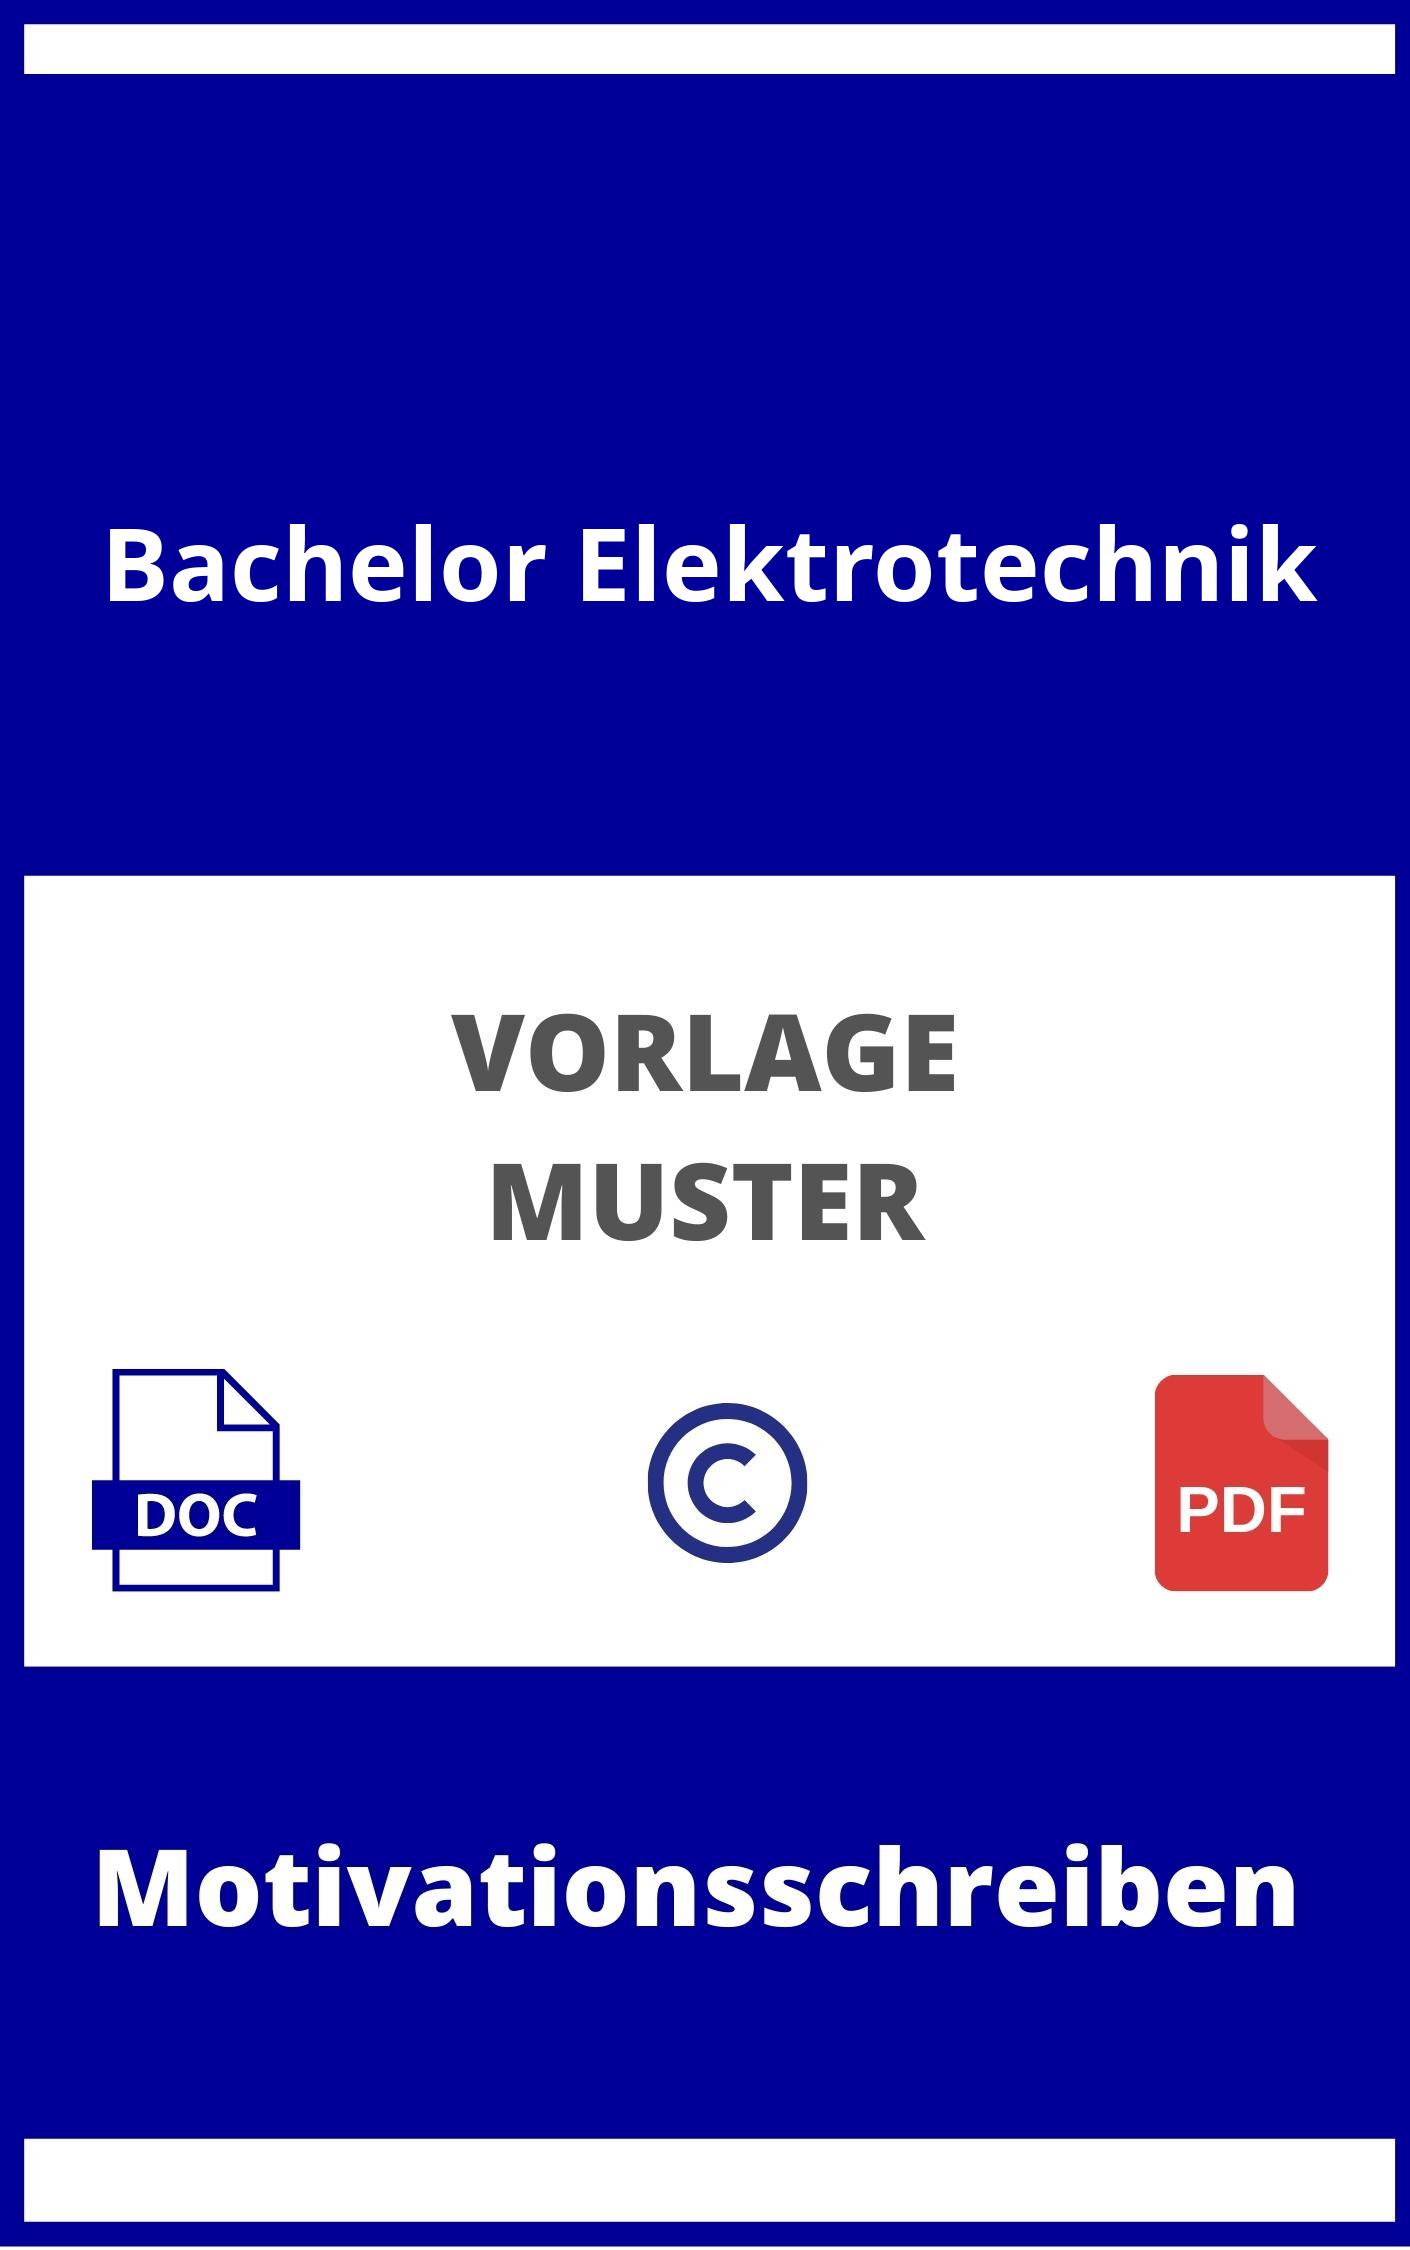 Motivationsschreiben Bachelor Elektrotechnik